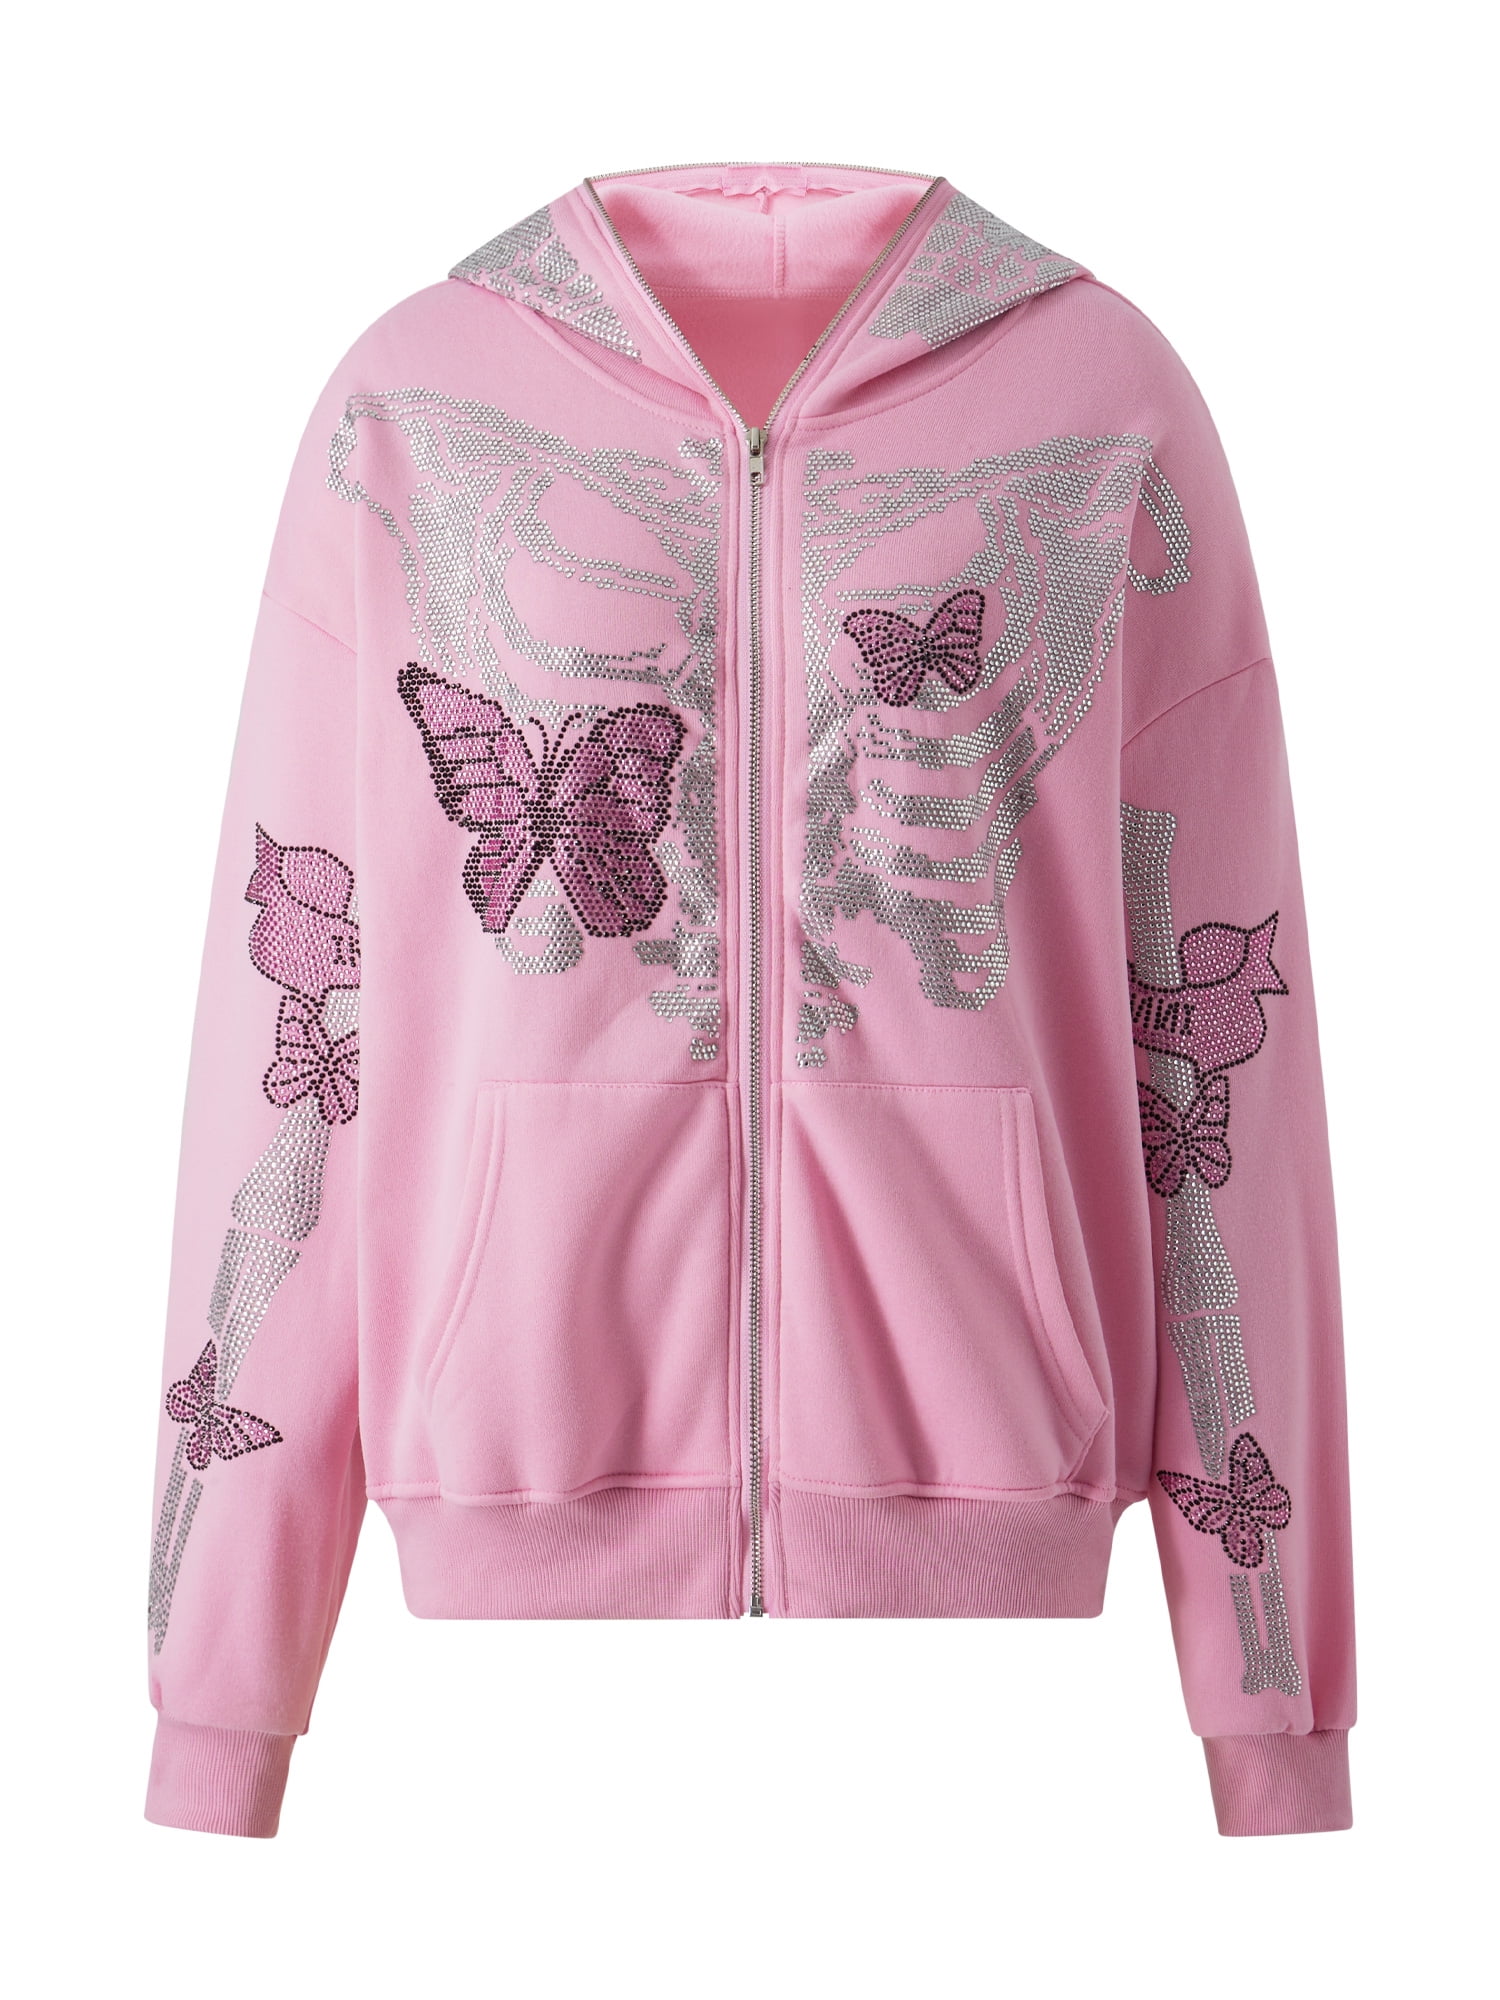 xkwyshop Rhinestone Graphic Zip Up Hoodies for Women Oversized Y2k  Sweatshirt Jacket E-Girl 90s Pullover Streetwear Pink S